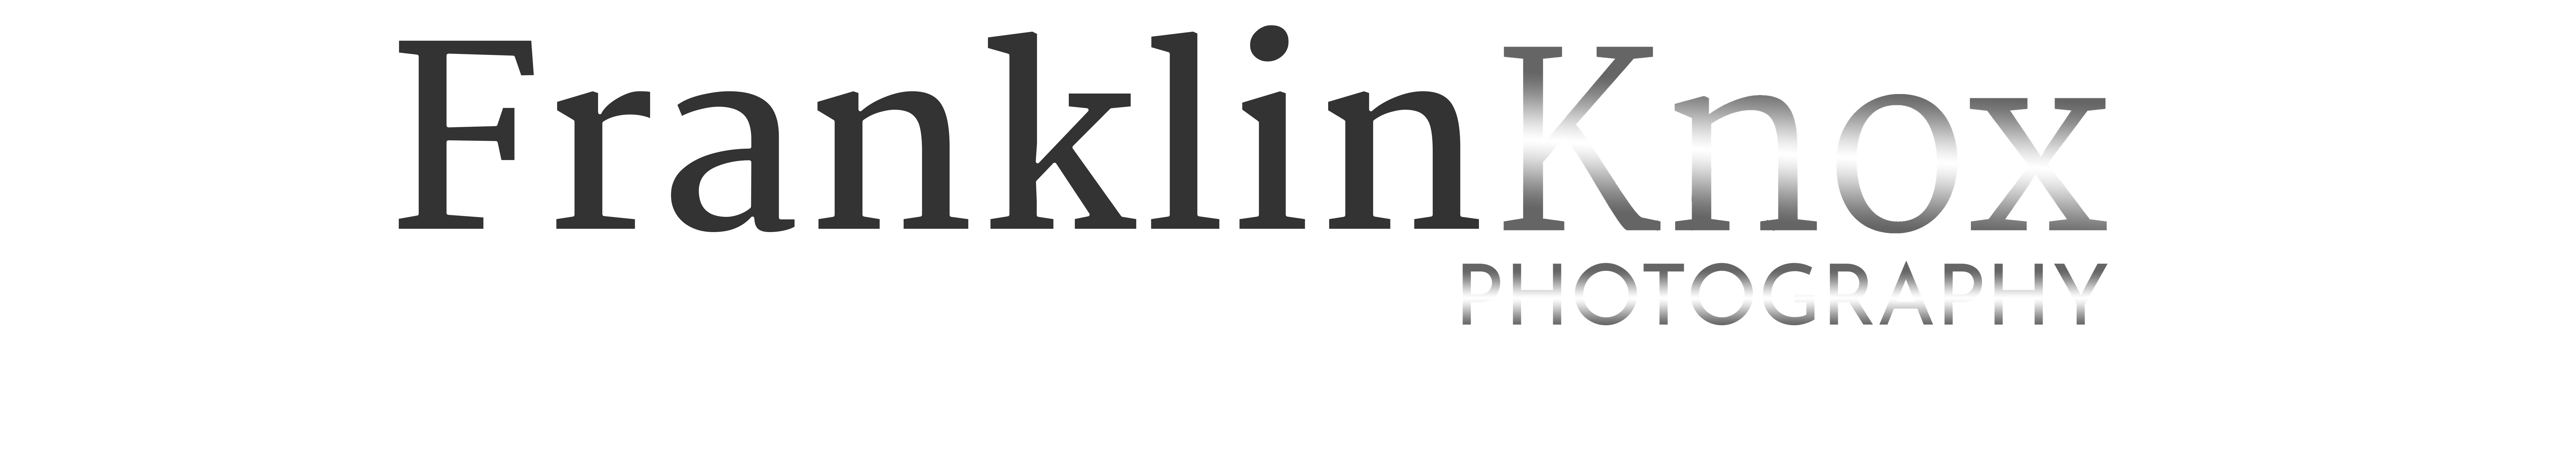 franklin knox photography logo